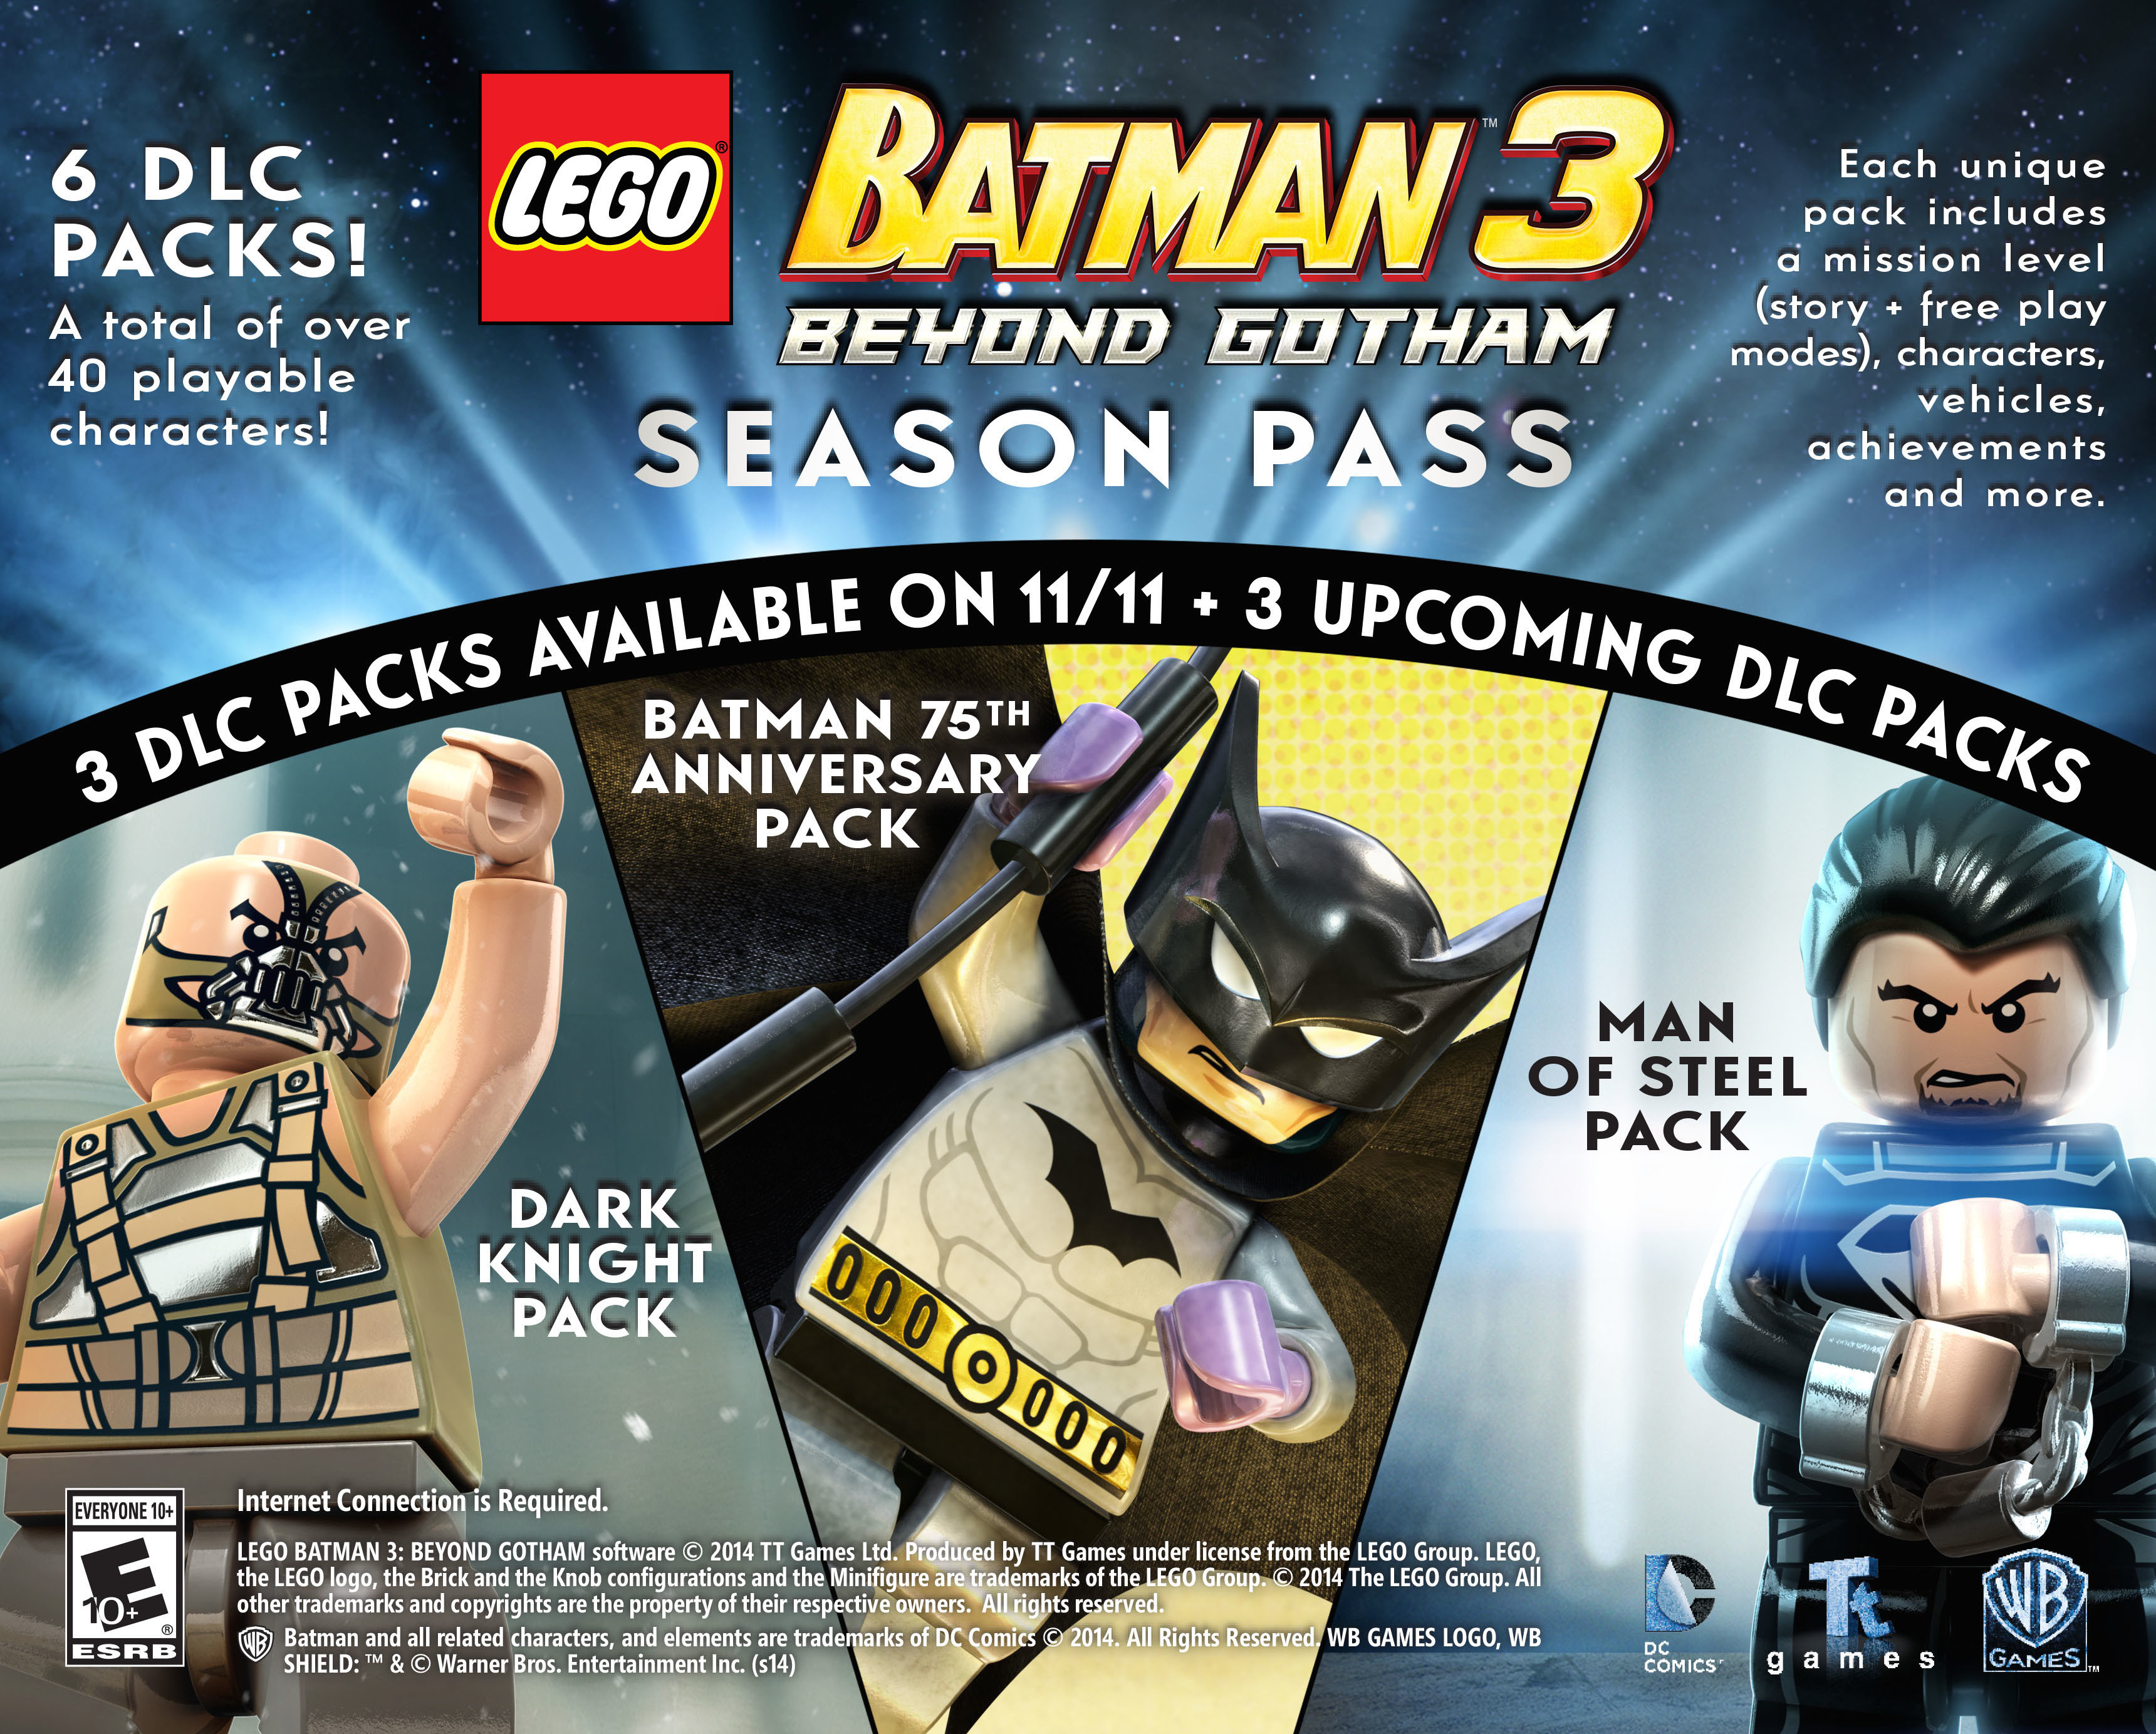 Play as Christopher Nolan's Dark Knight Trilogy characters in 'LEGO Batman 3: Beyond Gotham' | News